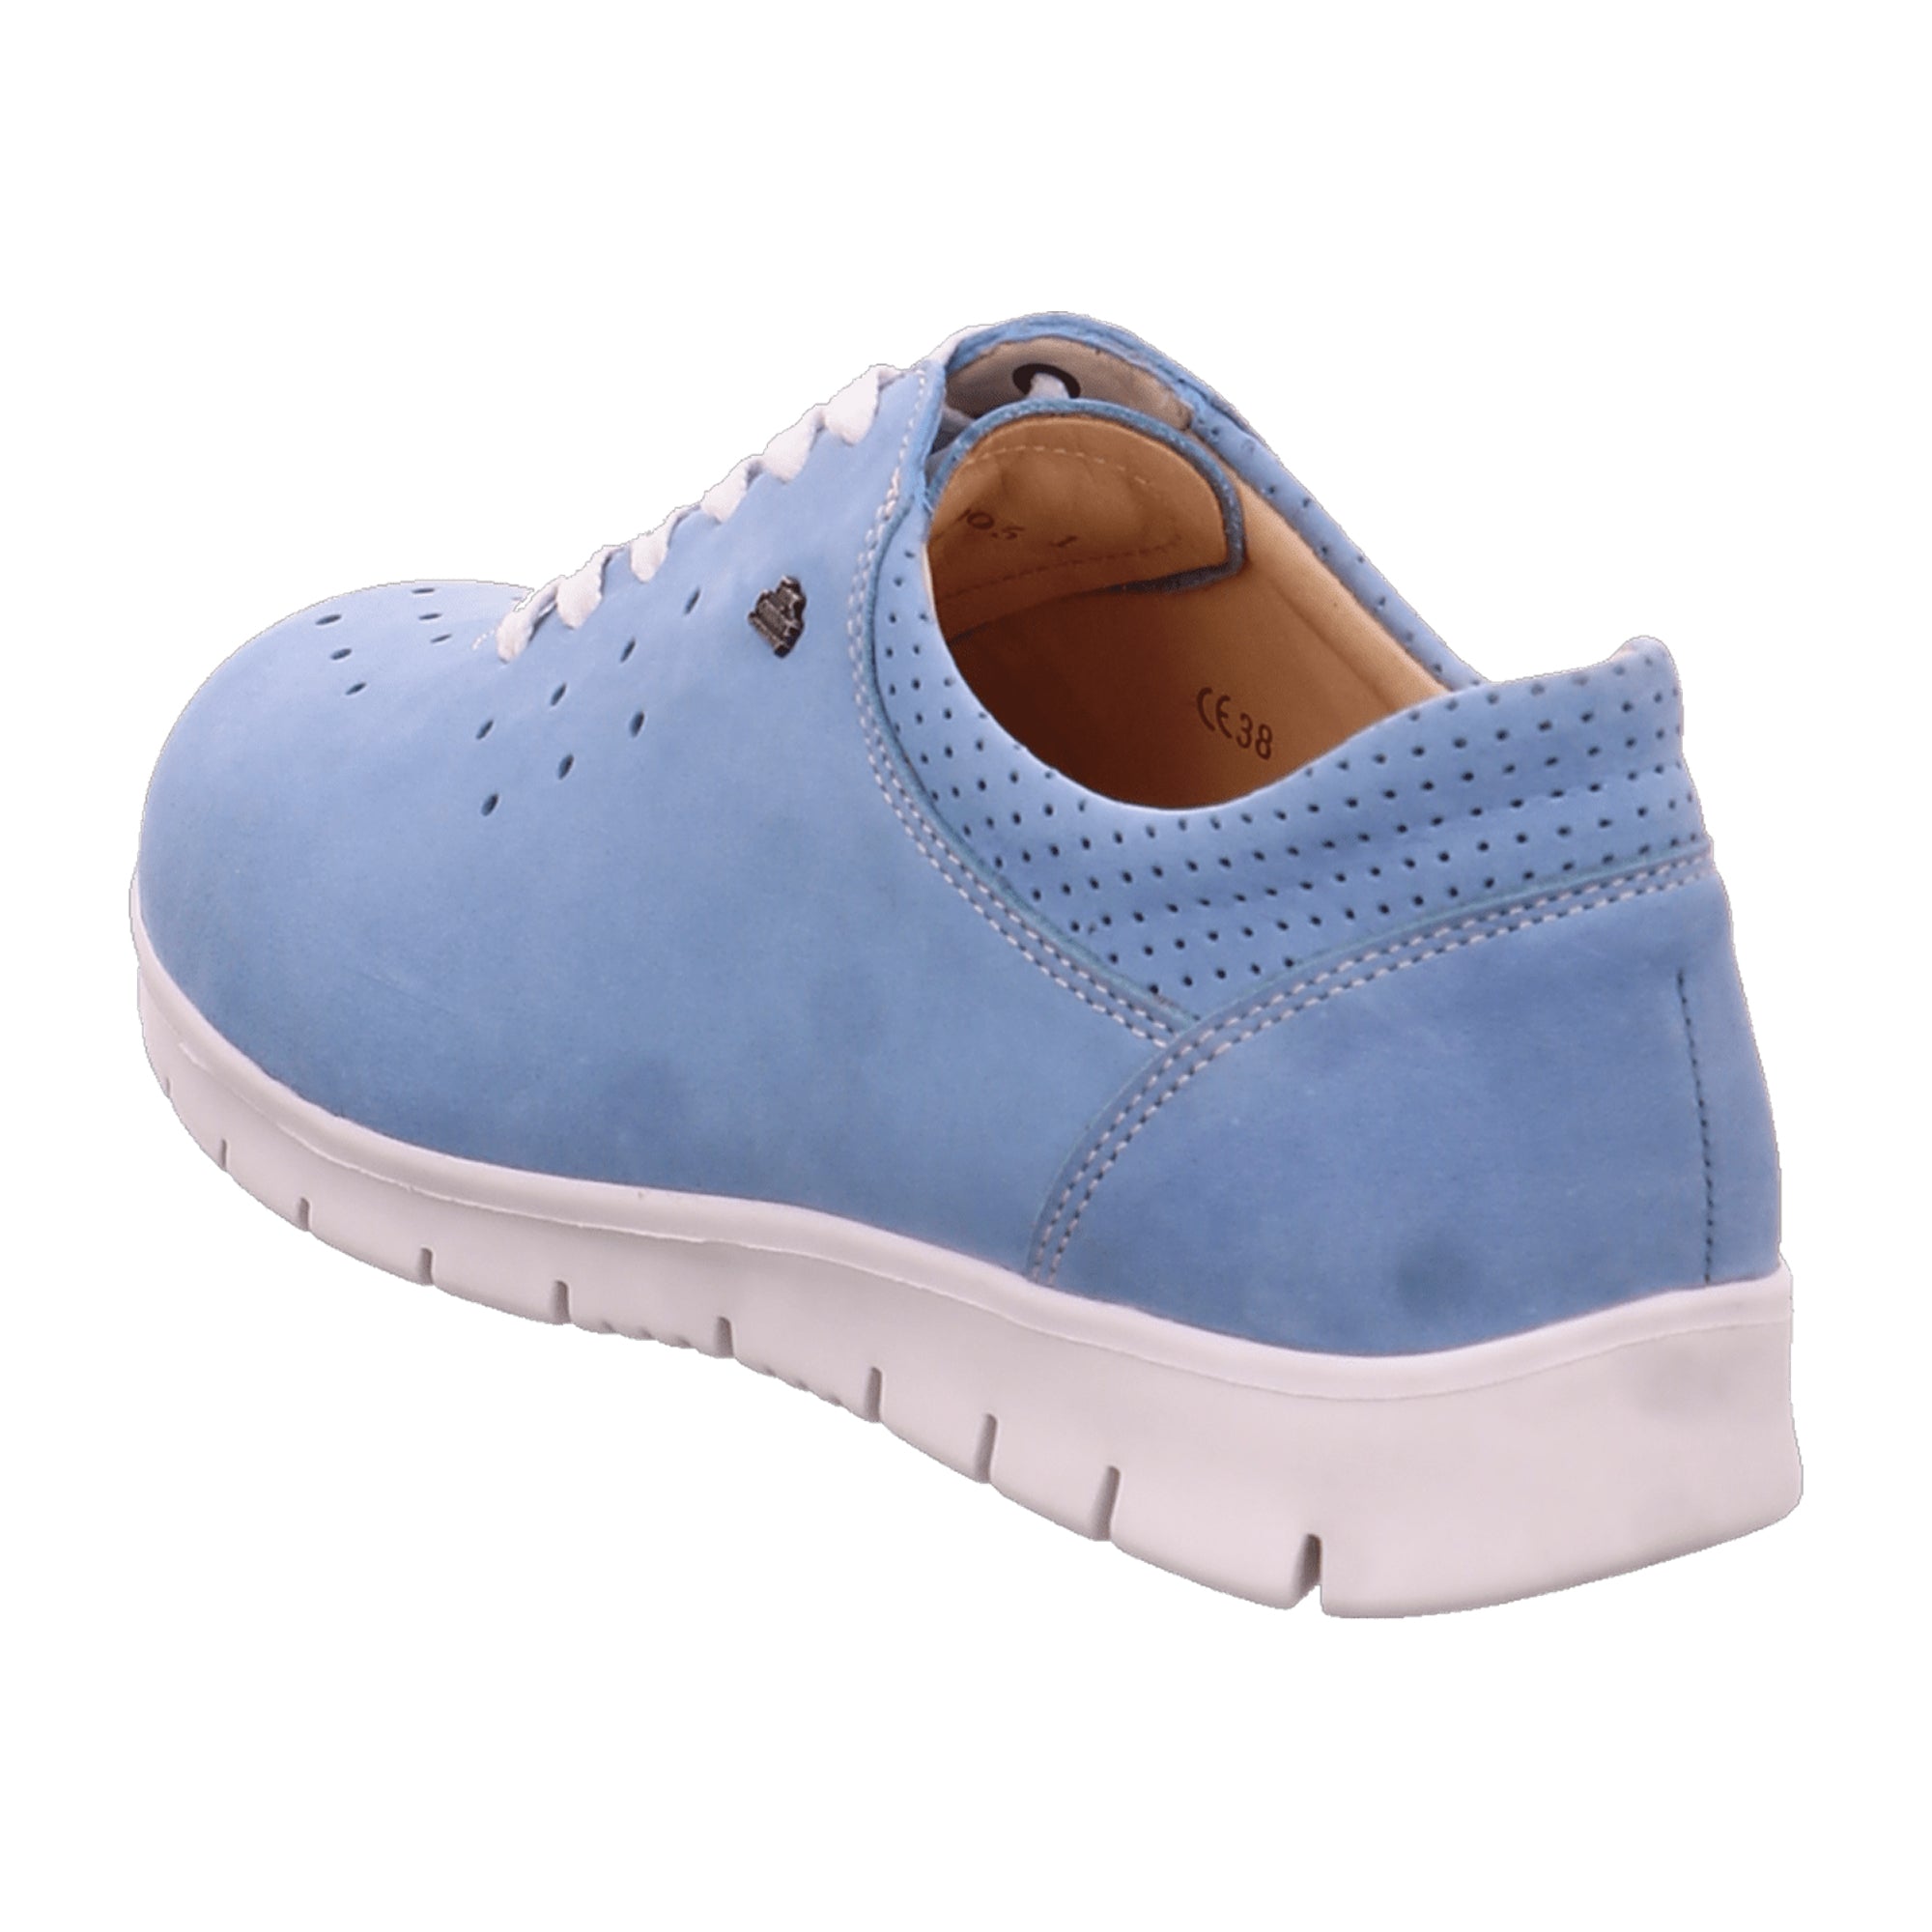 Finn Comfort Barletta Women's Comfort Sneakers, Stylish Blue